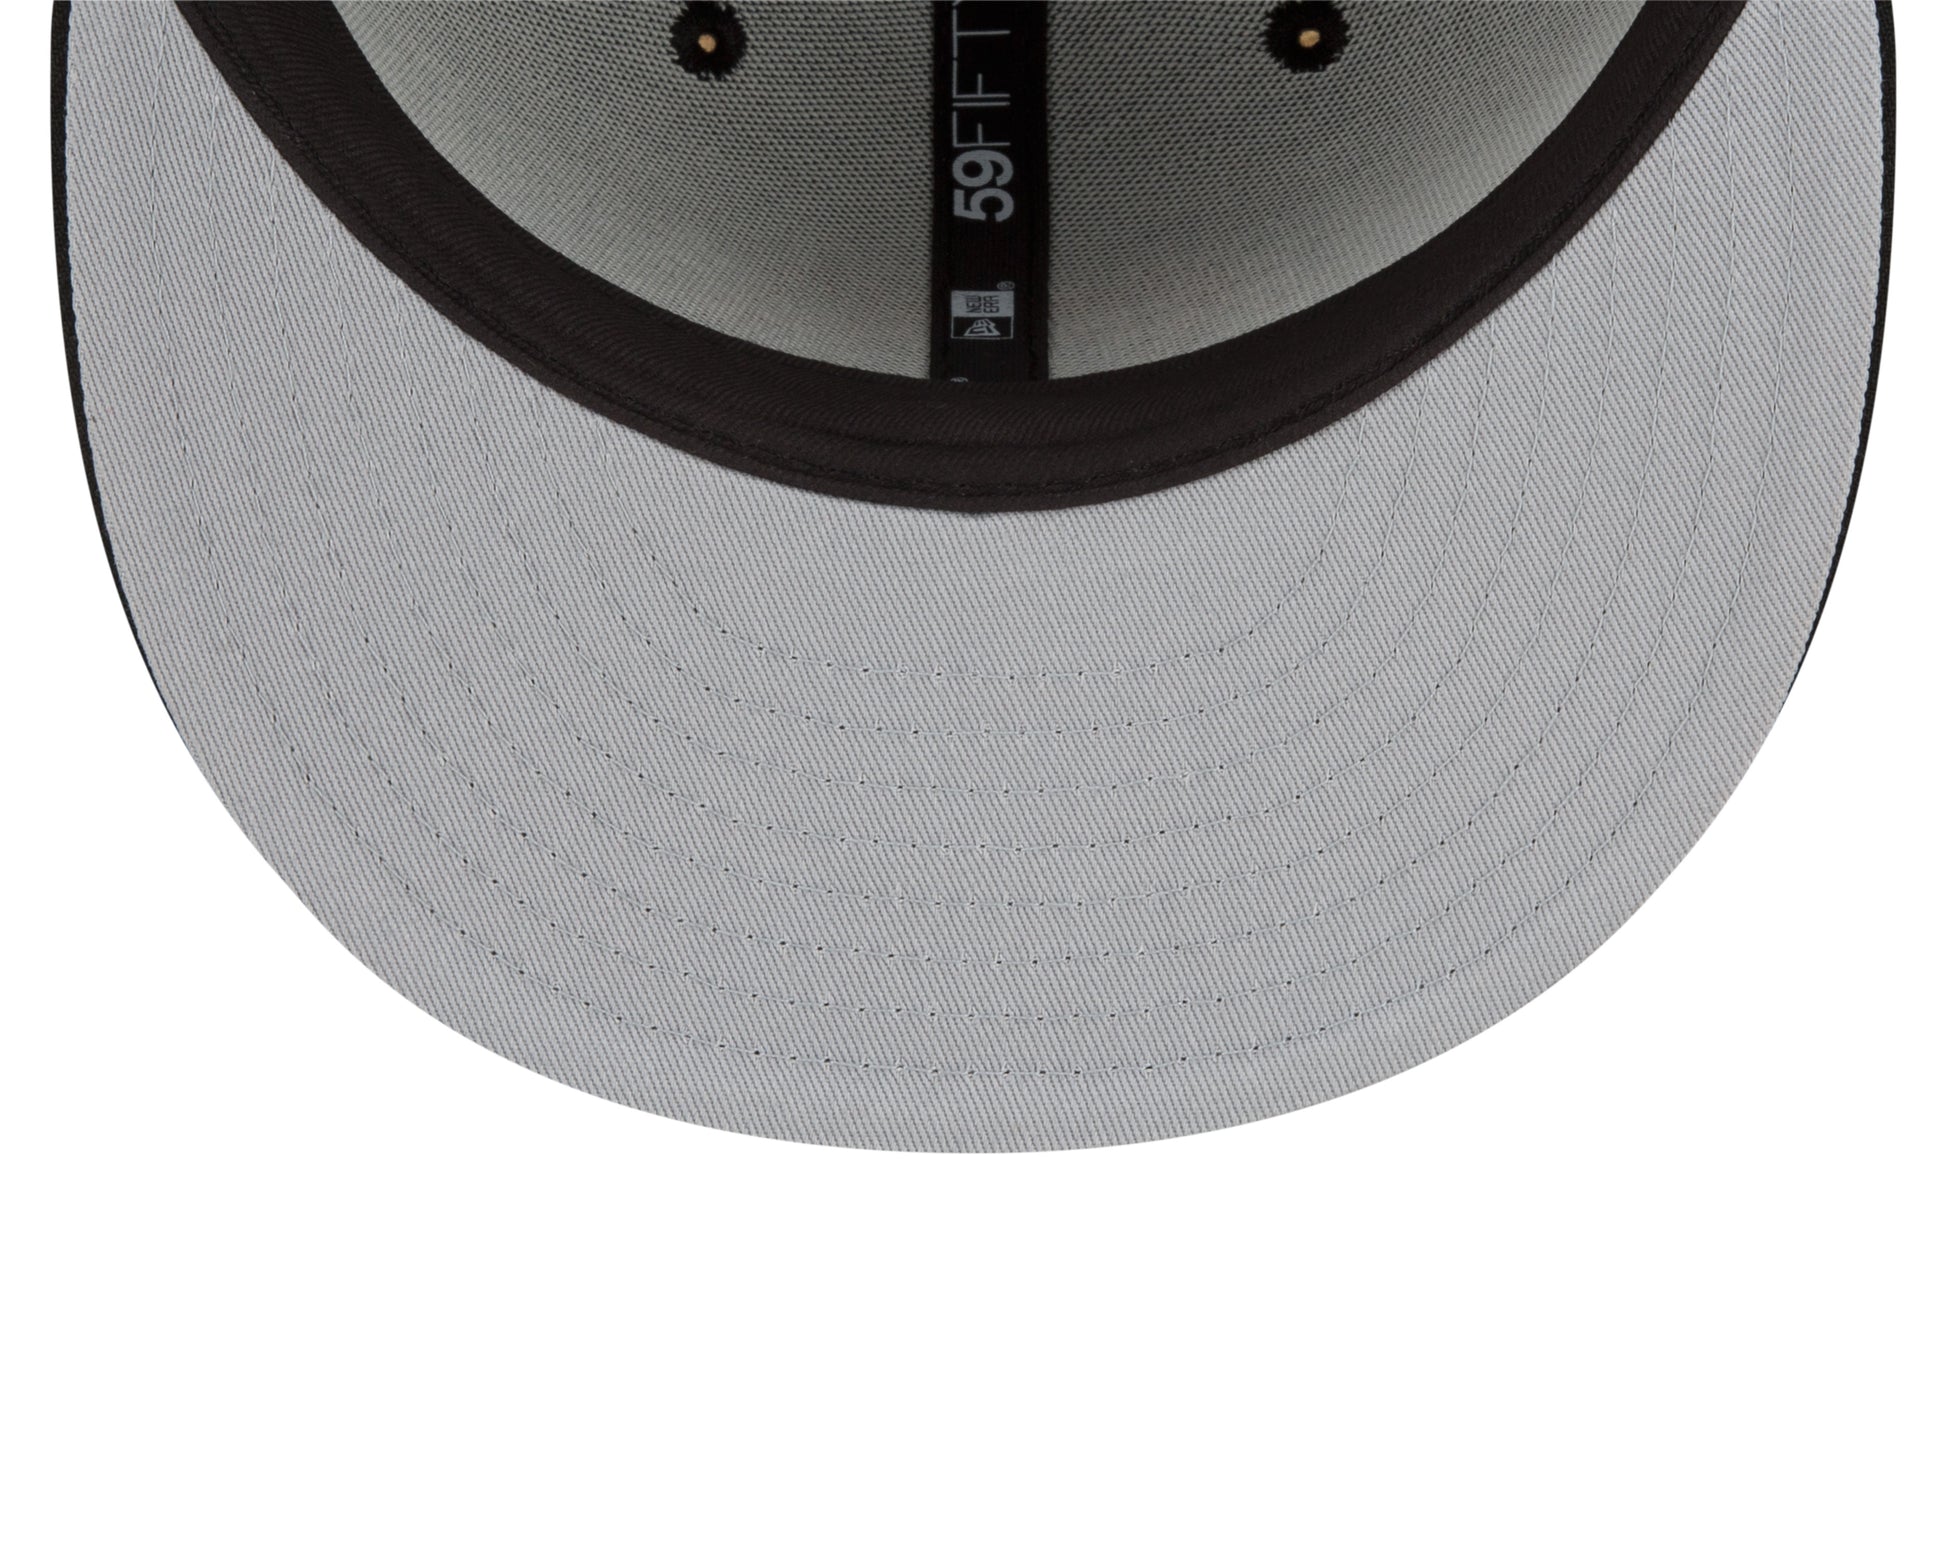 New Era Knicks 21-22 City Edition Alt 5950 Hat in Black - Bottom View